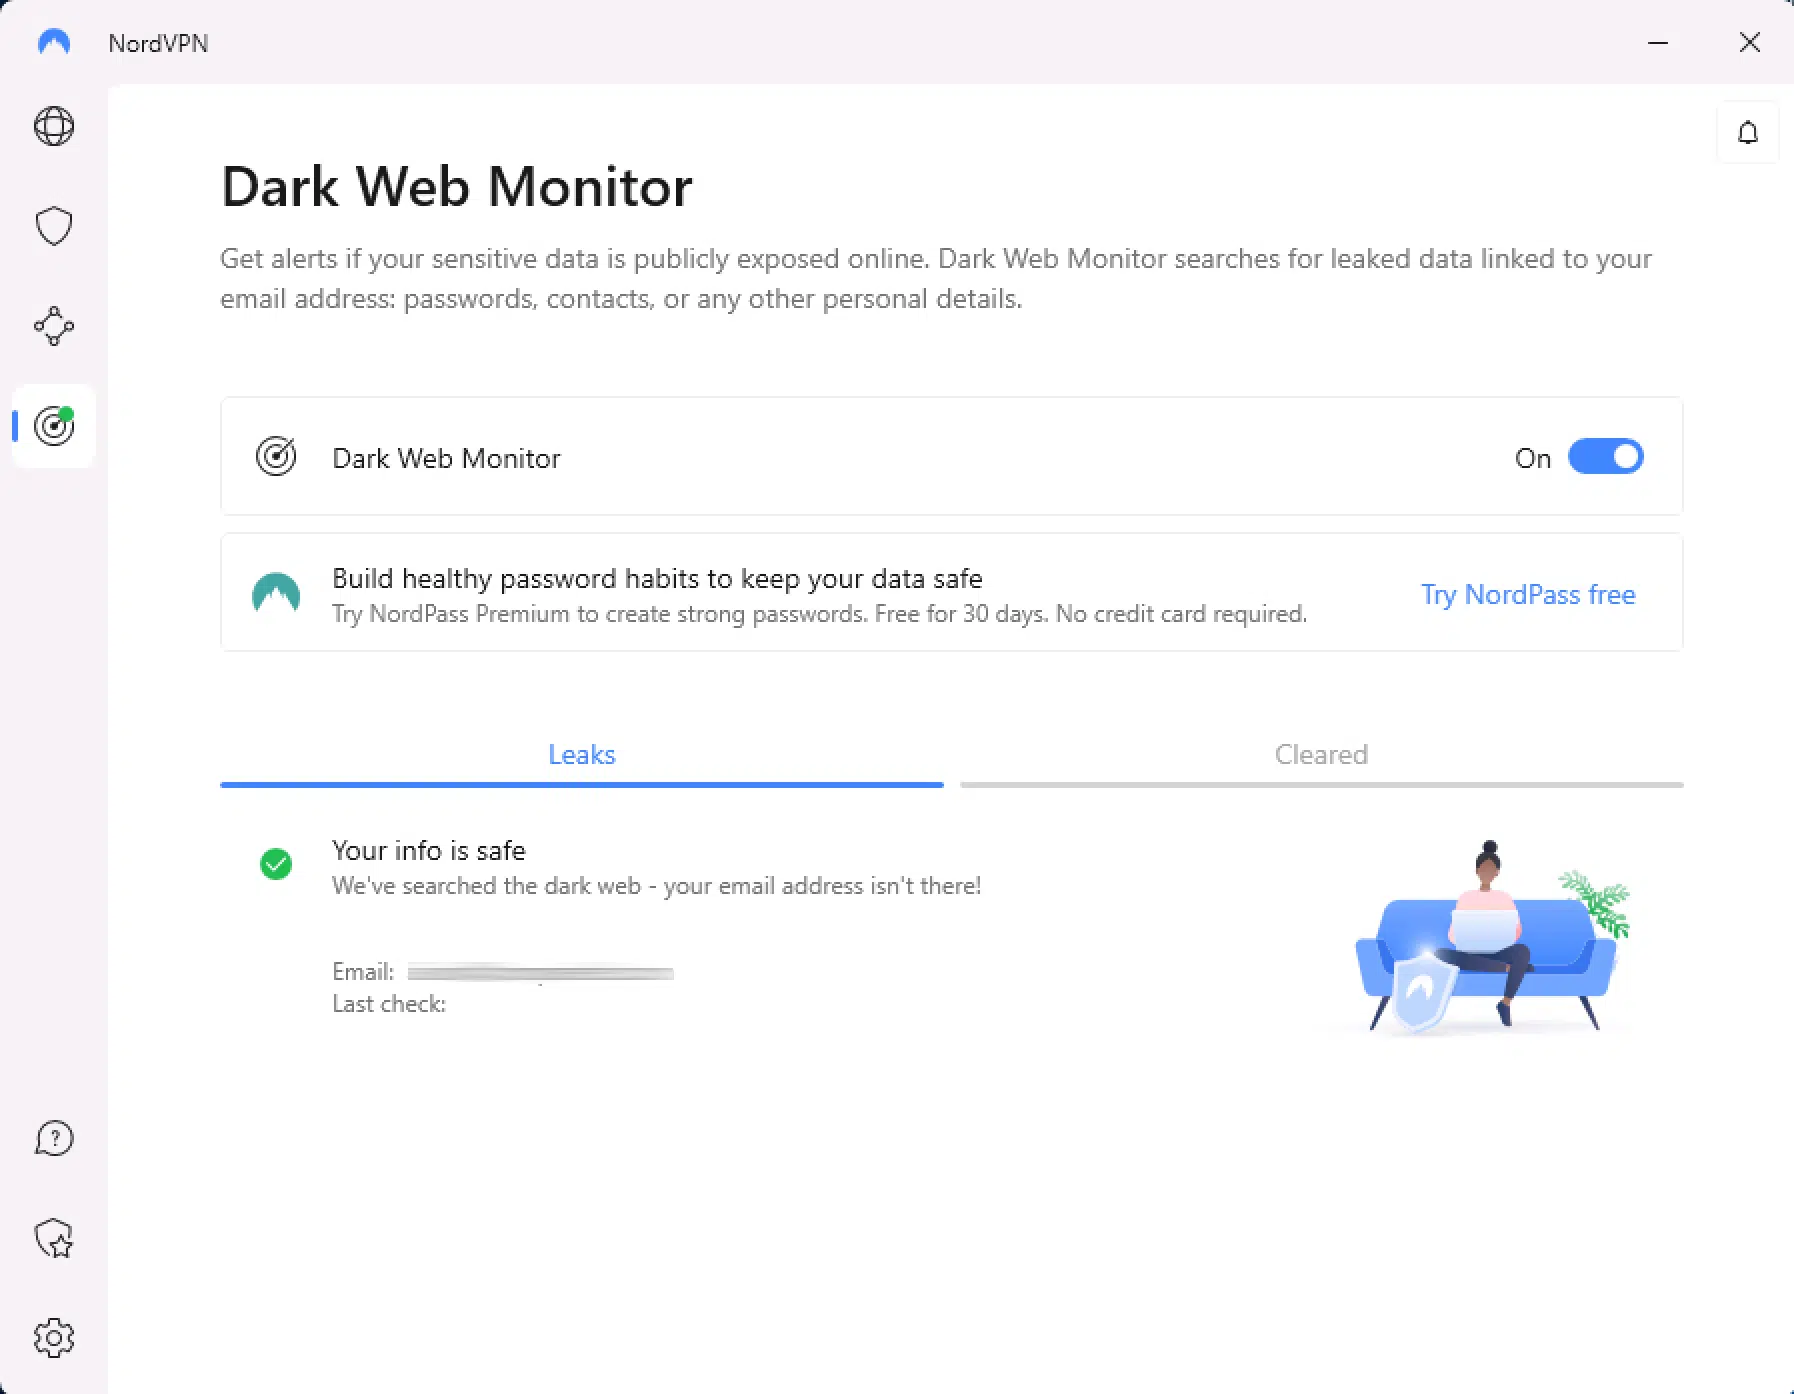 NordVPN - Dark Web Monitor - Active